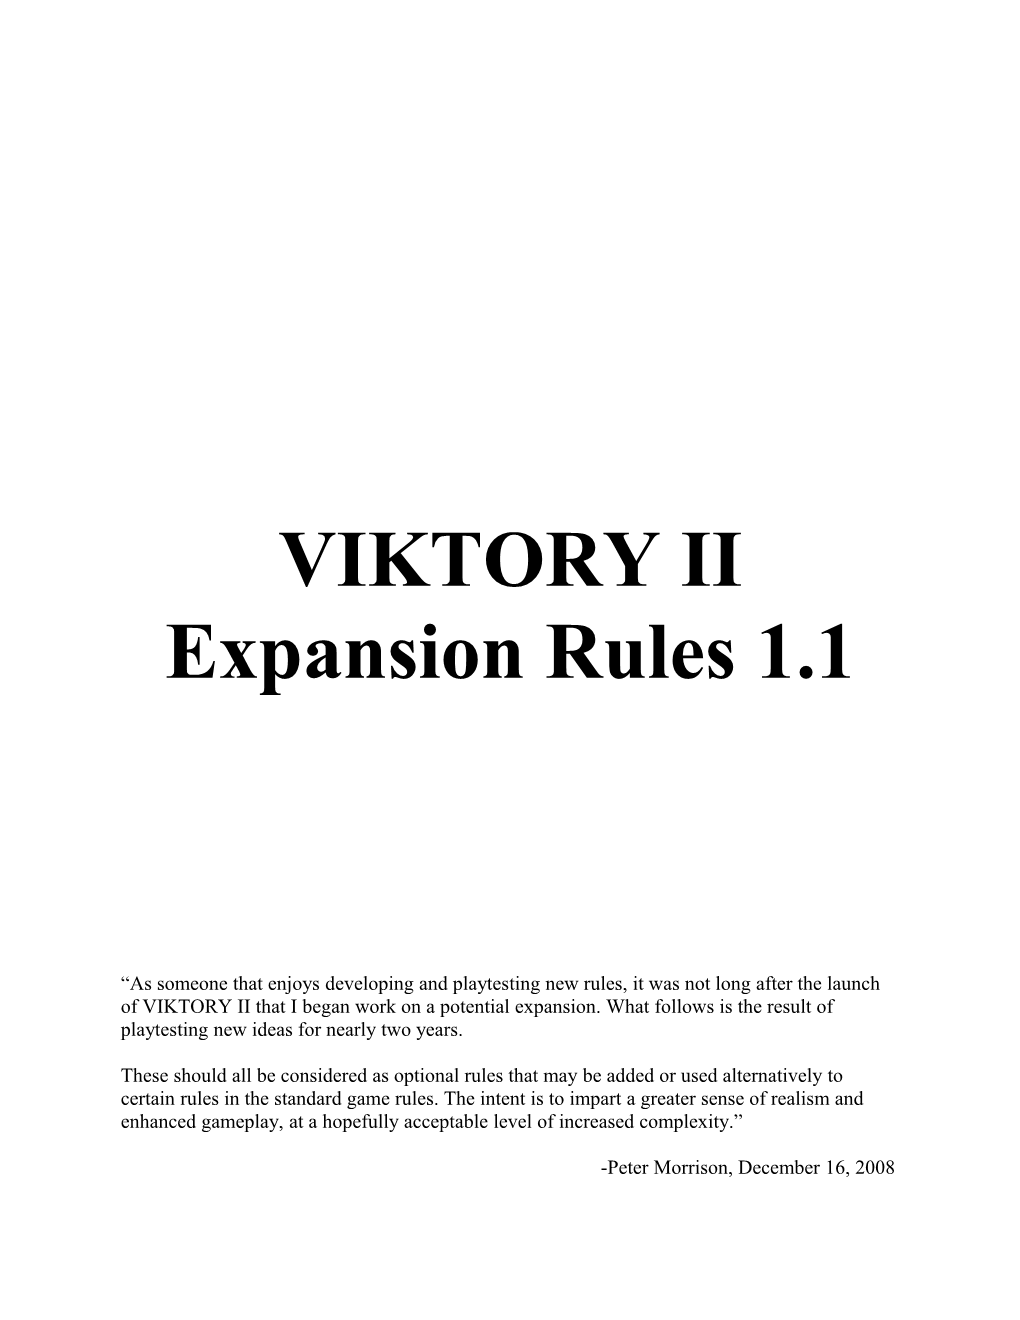 VIKTORY II Expansion Rules 1